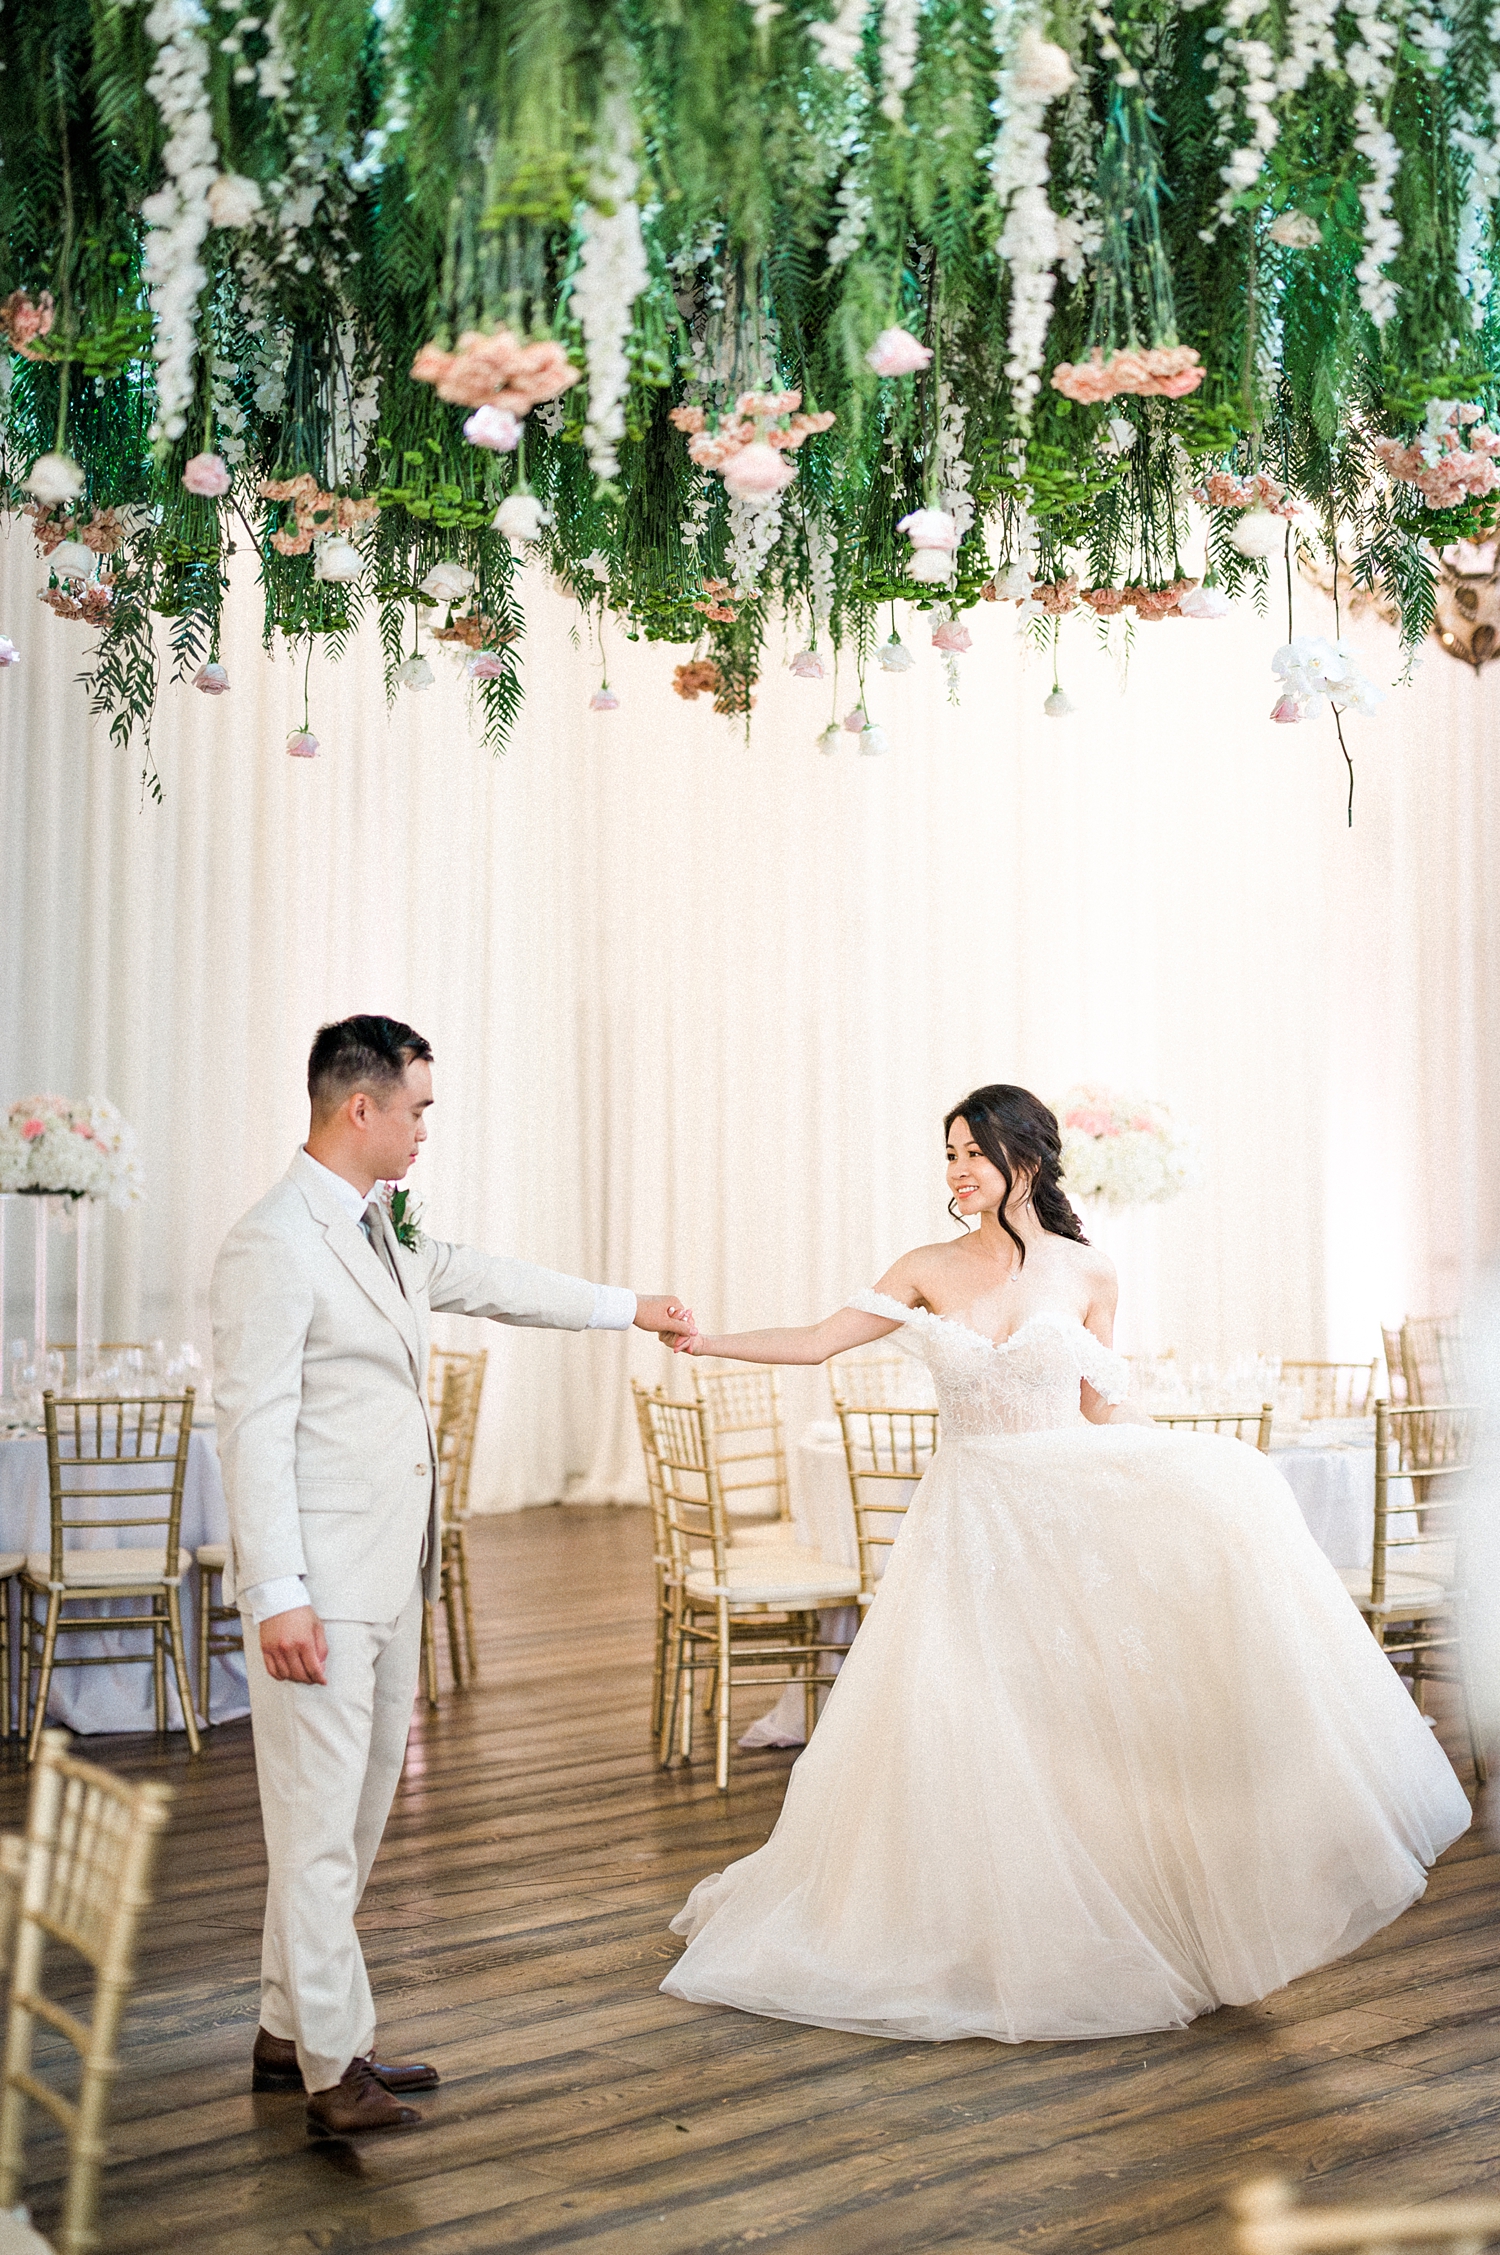 Chinese Tea Ceremony | Romantic Garden Wedding | OC Wedding Photographer | The Villa Westminster-116| Nataly Hernandez Photography | Diana + Byron.jpg